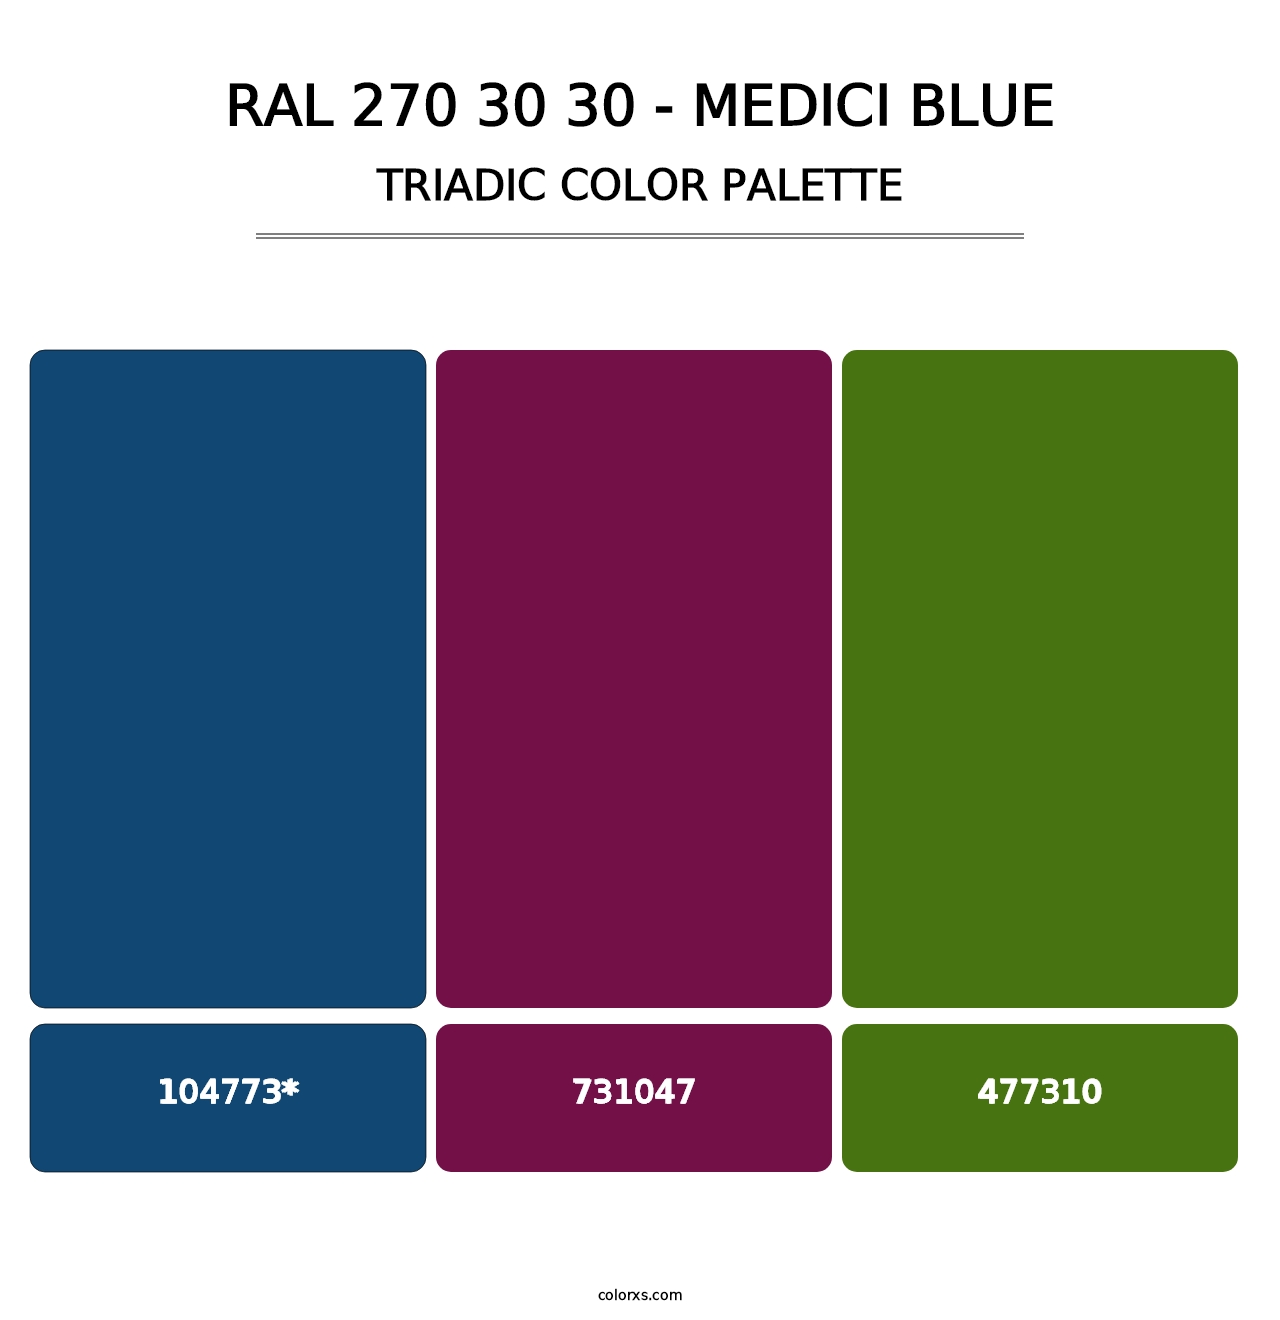 RAL 270 30 30 - Medici Blue - Triadic Color Palette